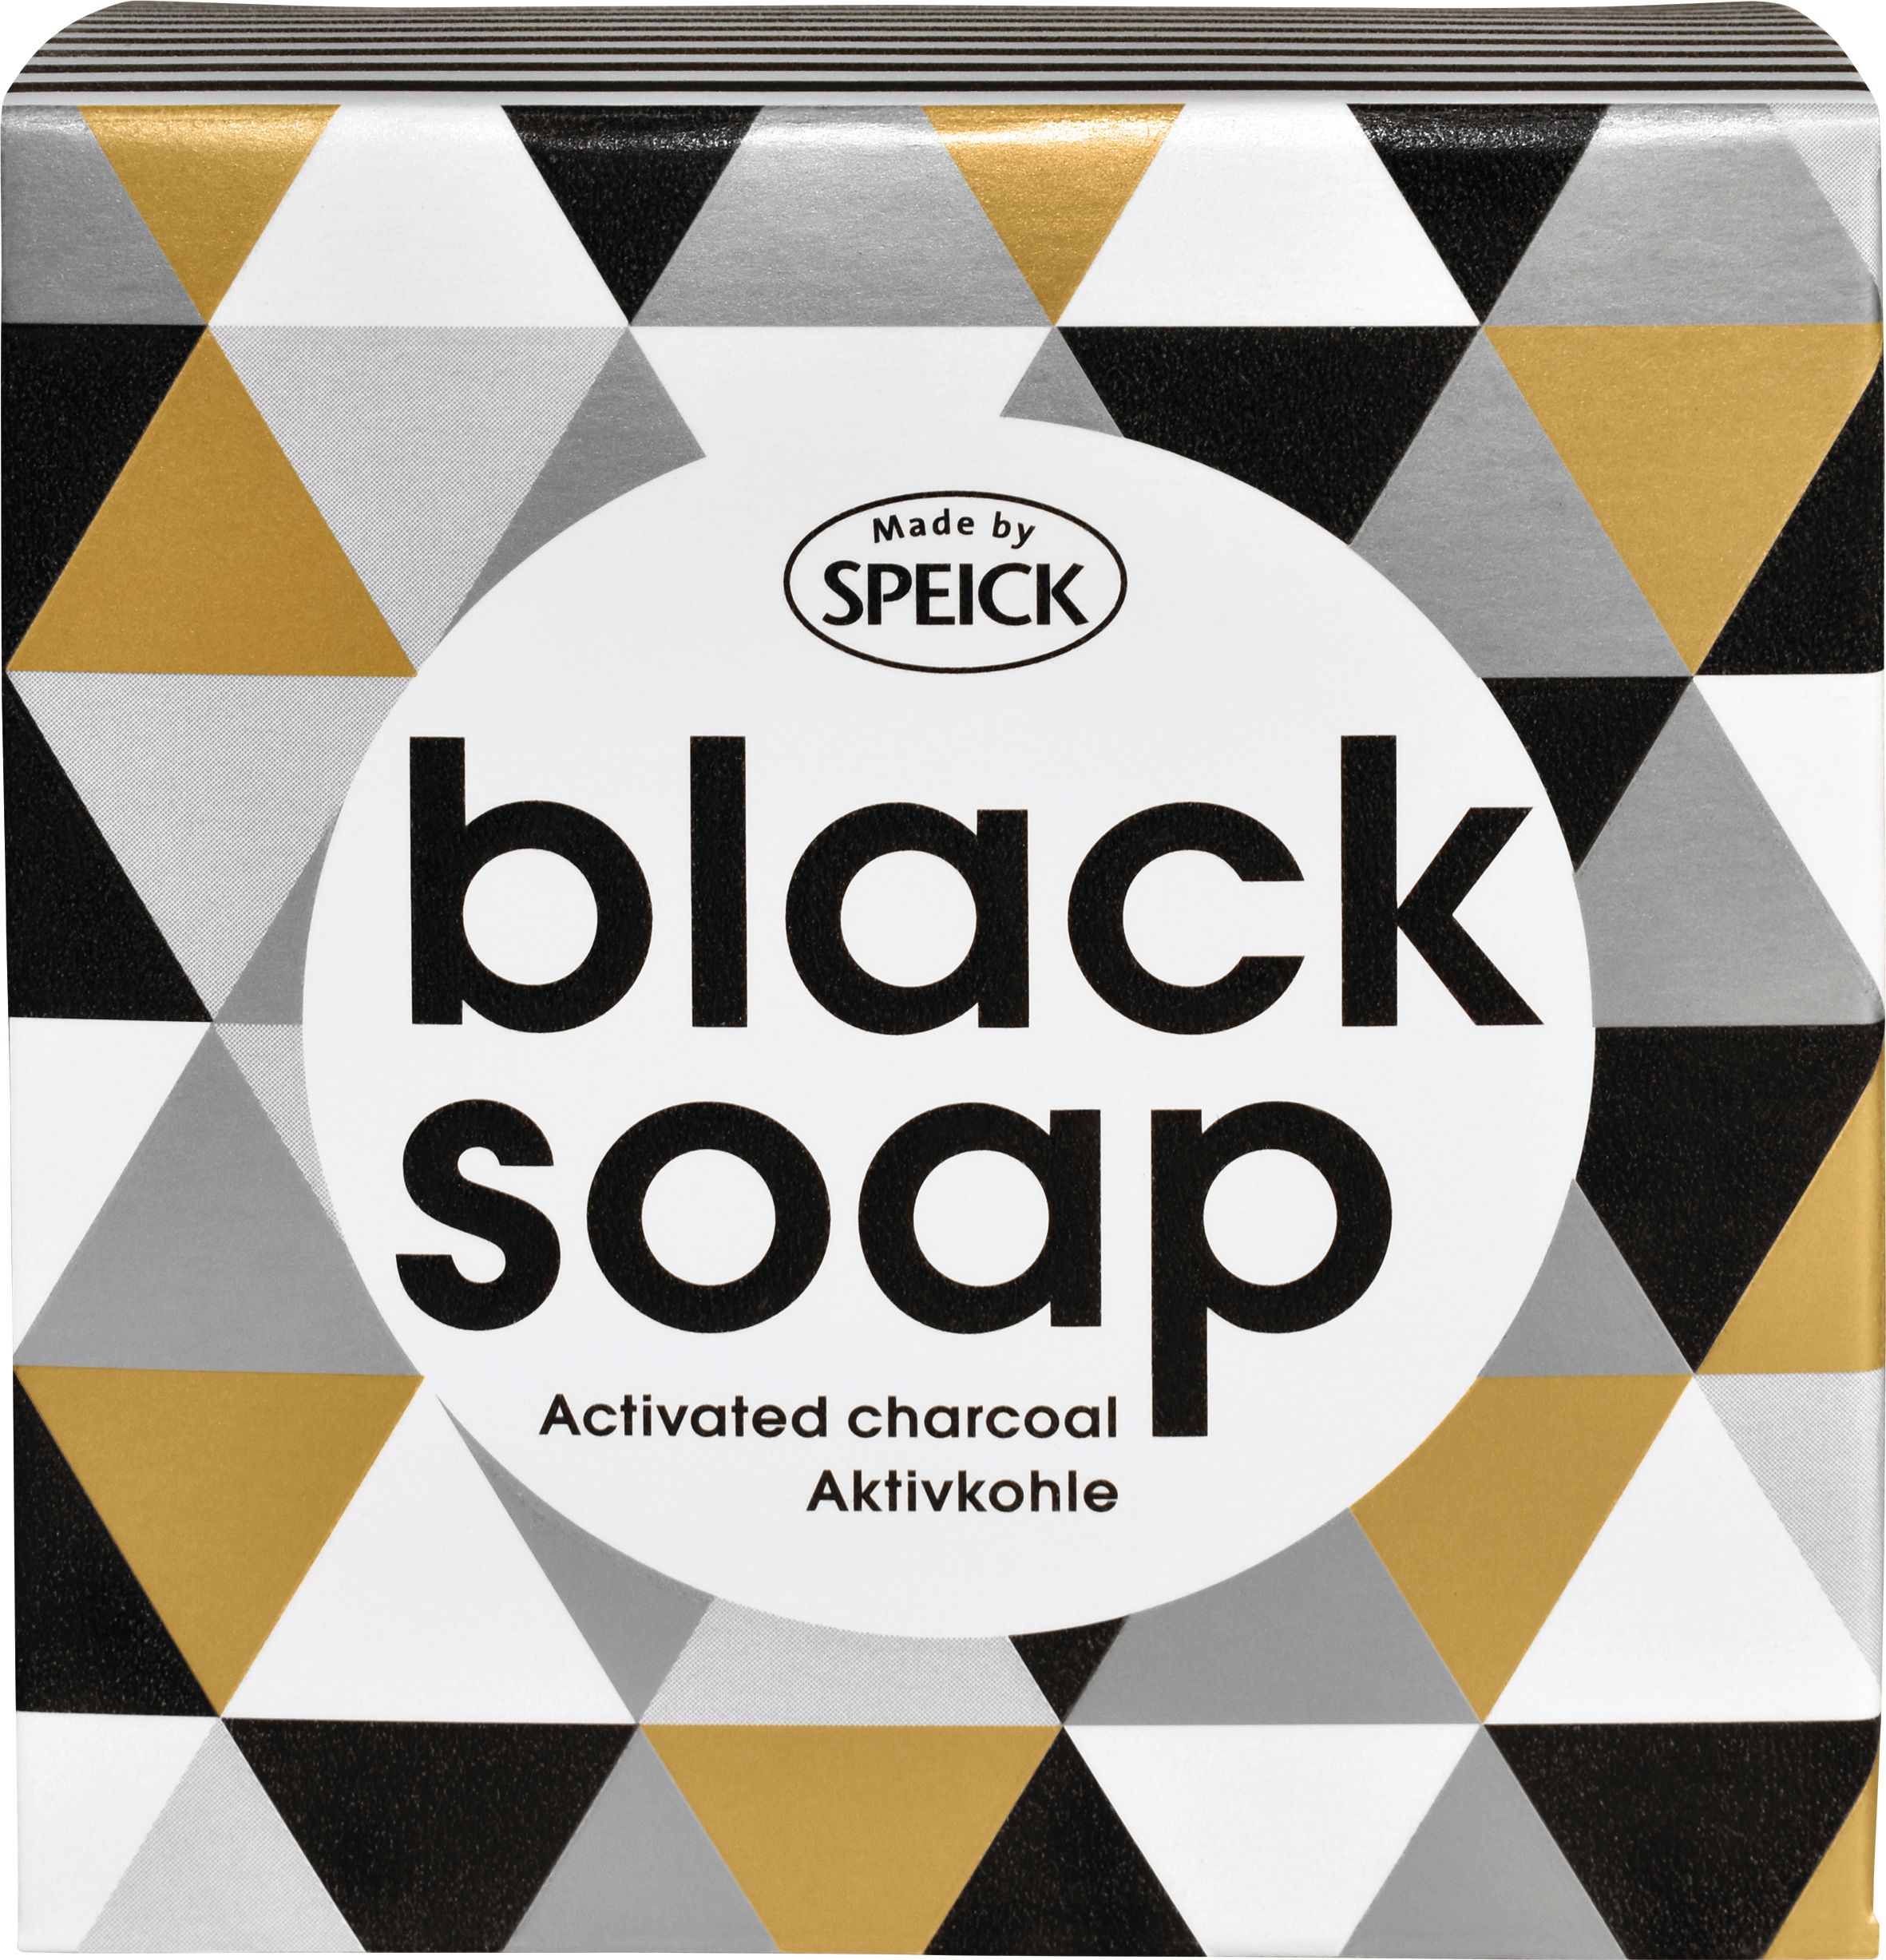 Speick Black Soap Aktivkohle